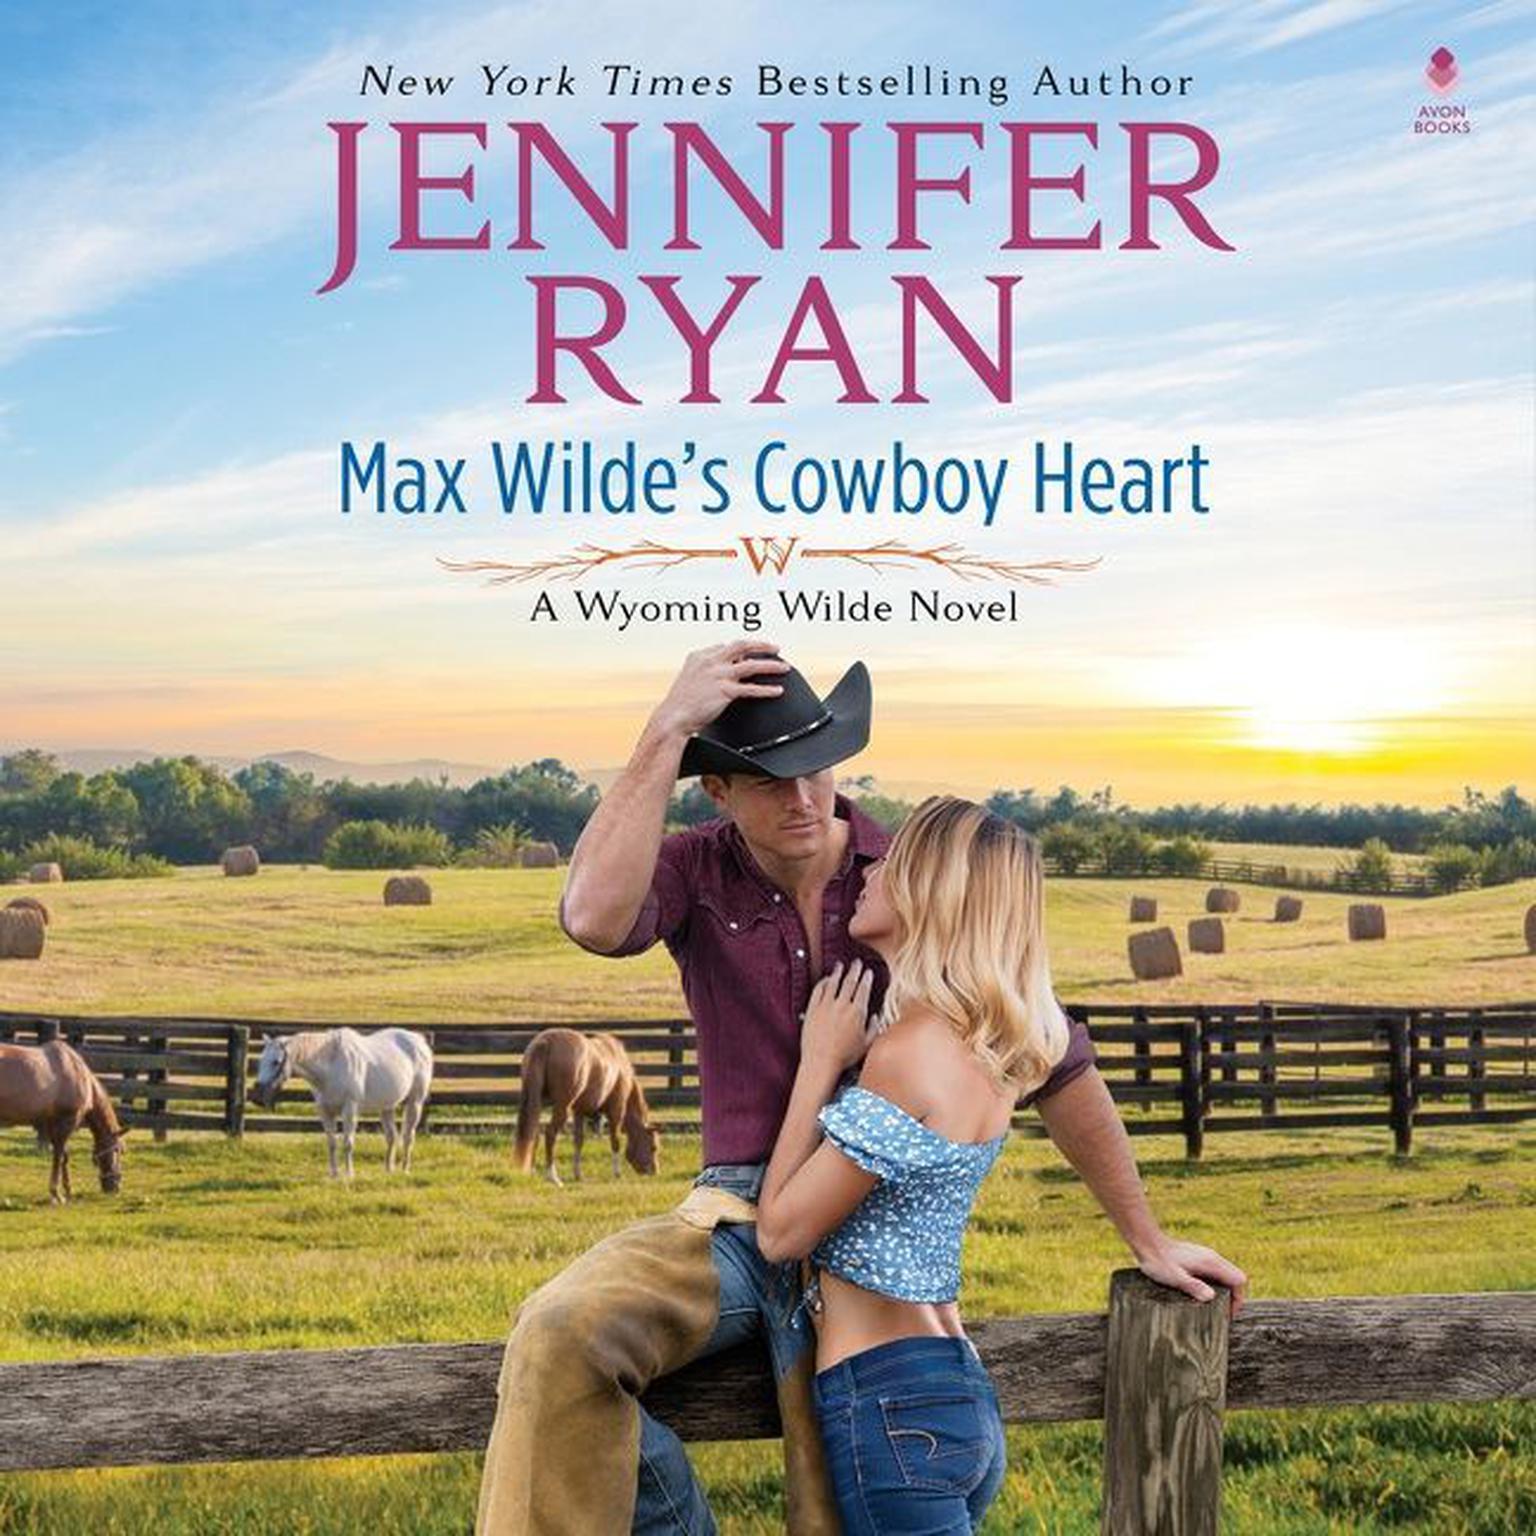 Max Wildes Cowboy Heart: A Wyoming Wilde Novel Audiobook, by Jennifer Ryan